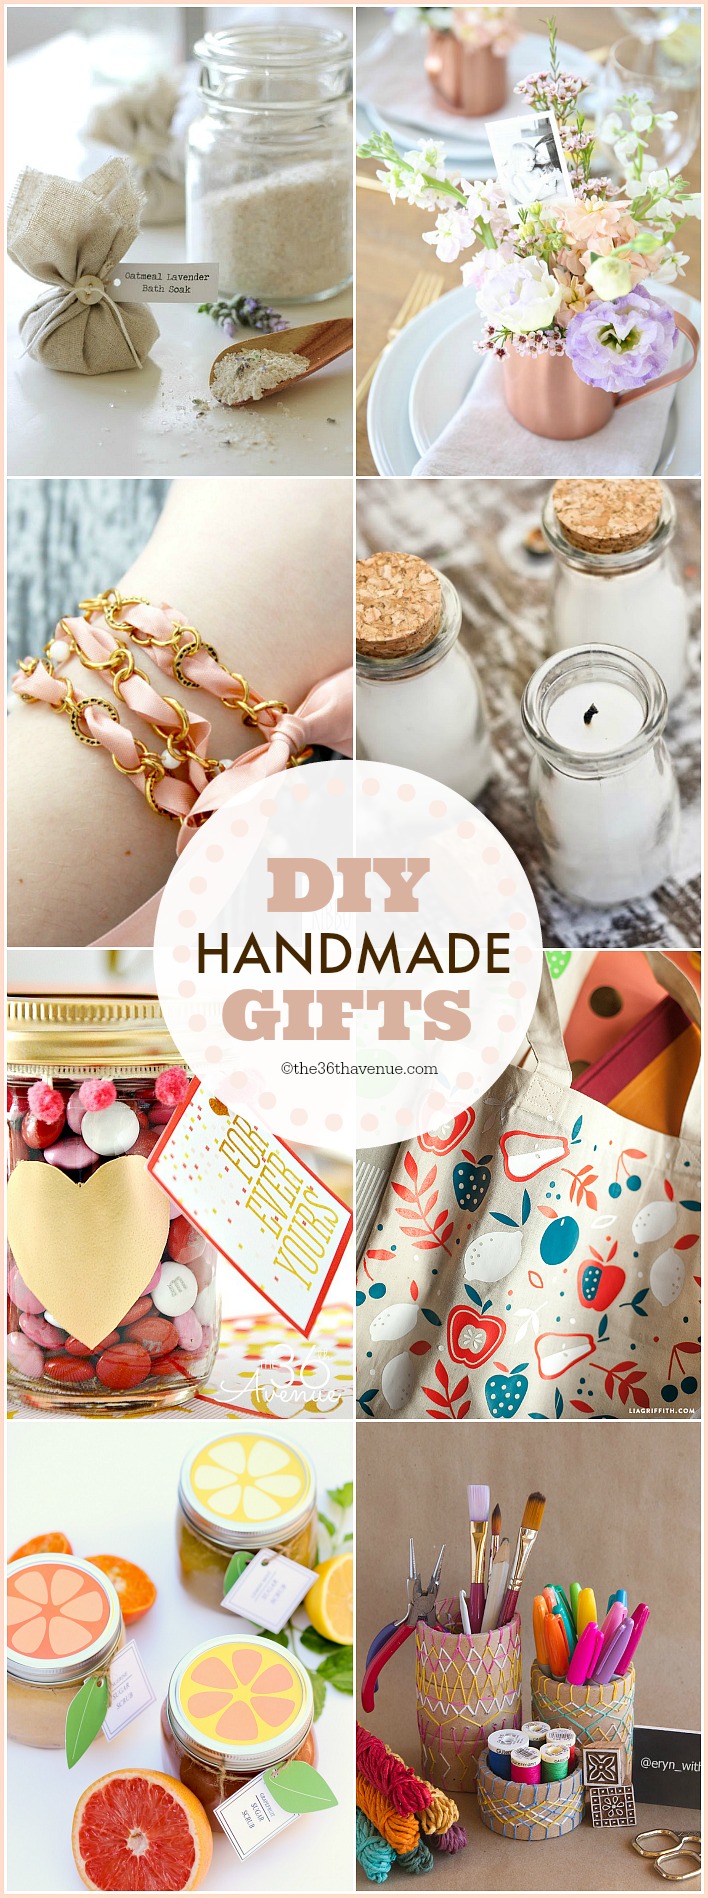 25 Handmade Gifts Under 5 Dollars